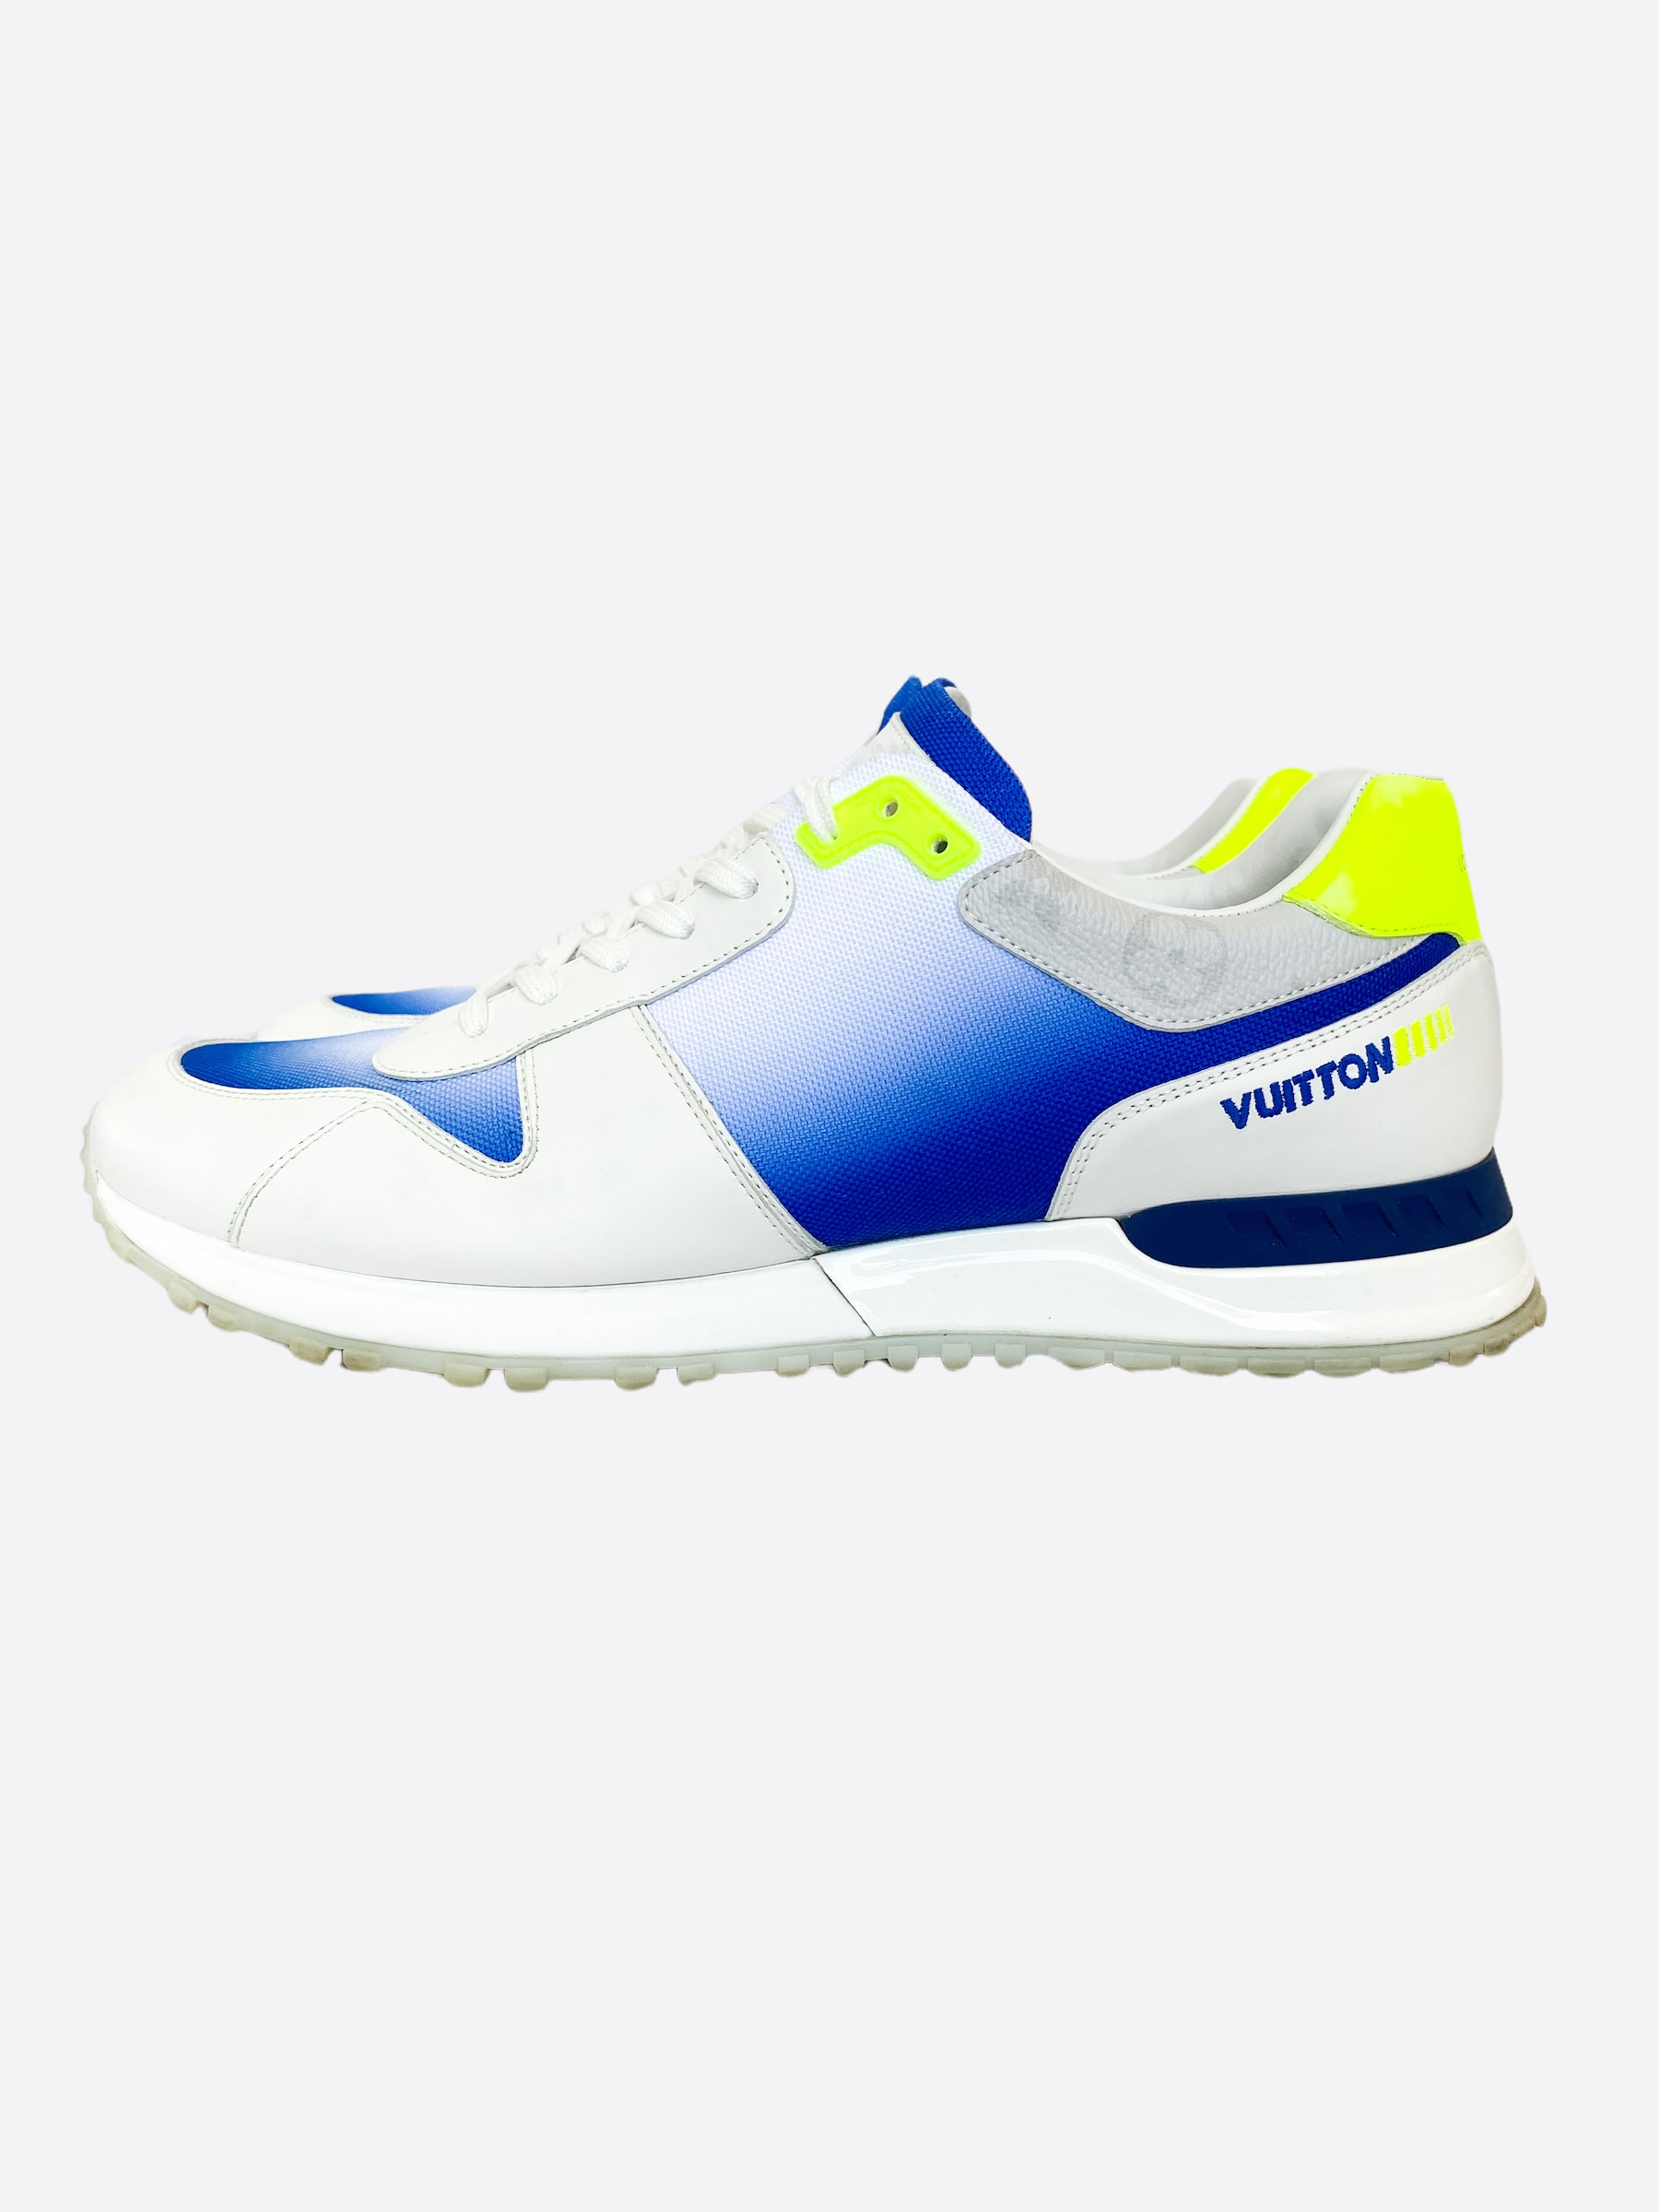 Louis Vuitton Blue High Top Sneakers - HypedEffect